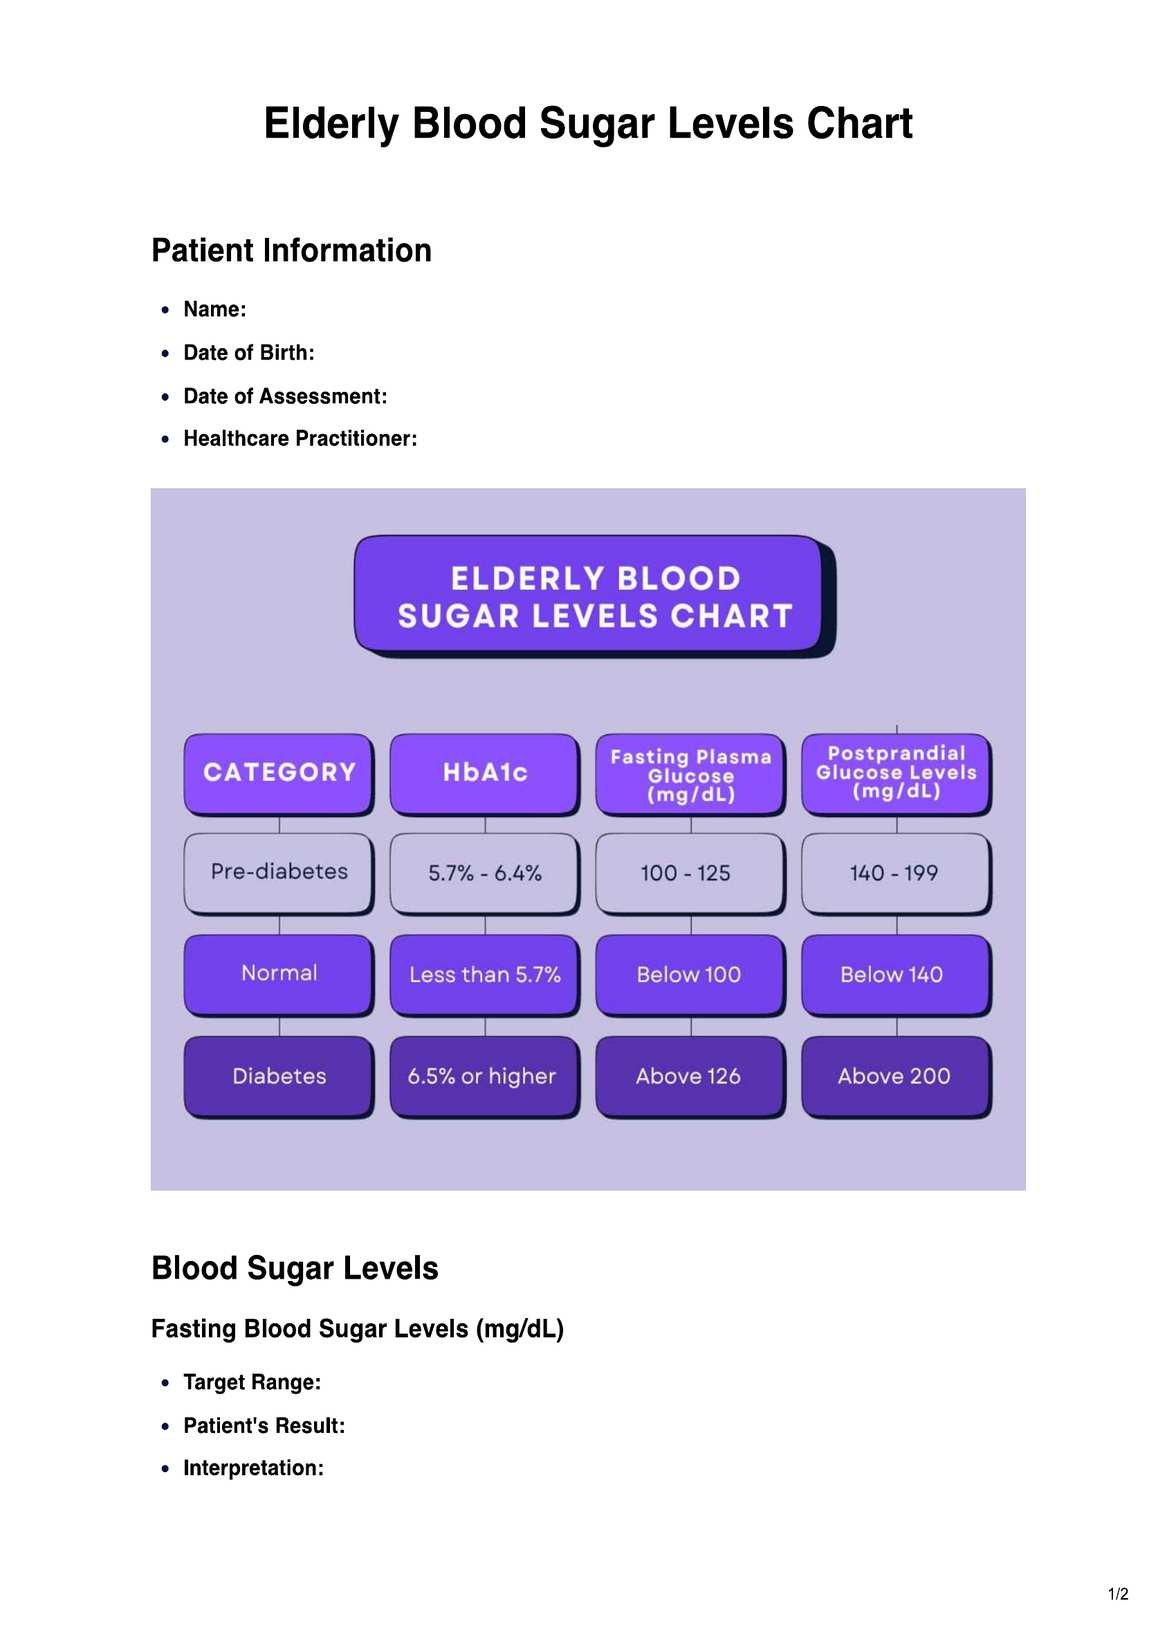 Elderly Blood Sugar Levels PDF Example